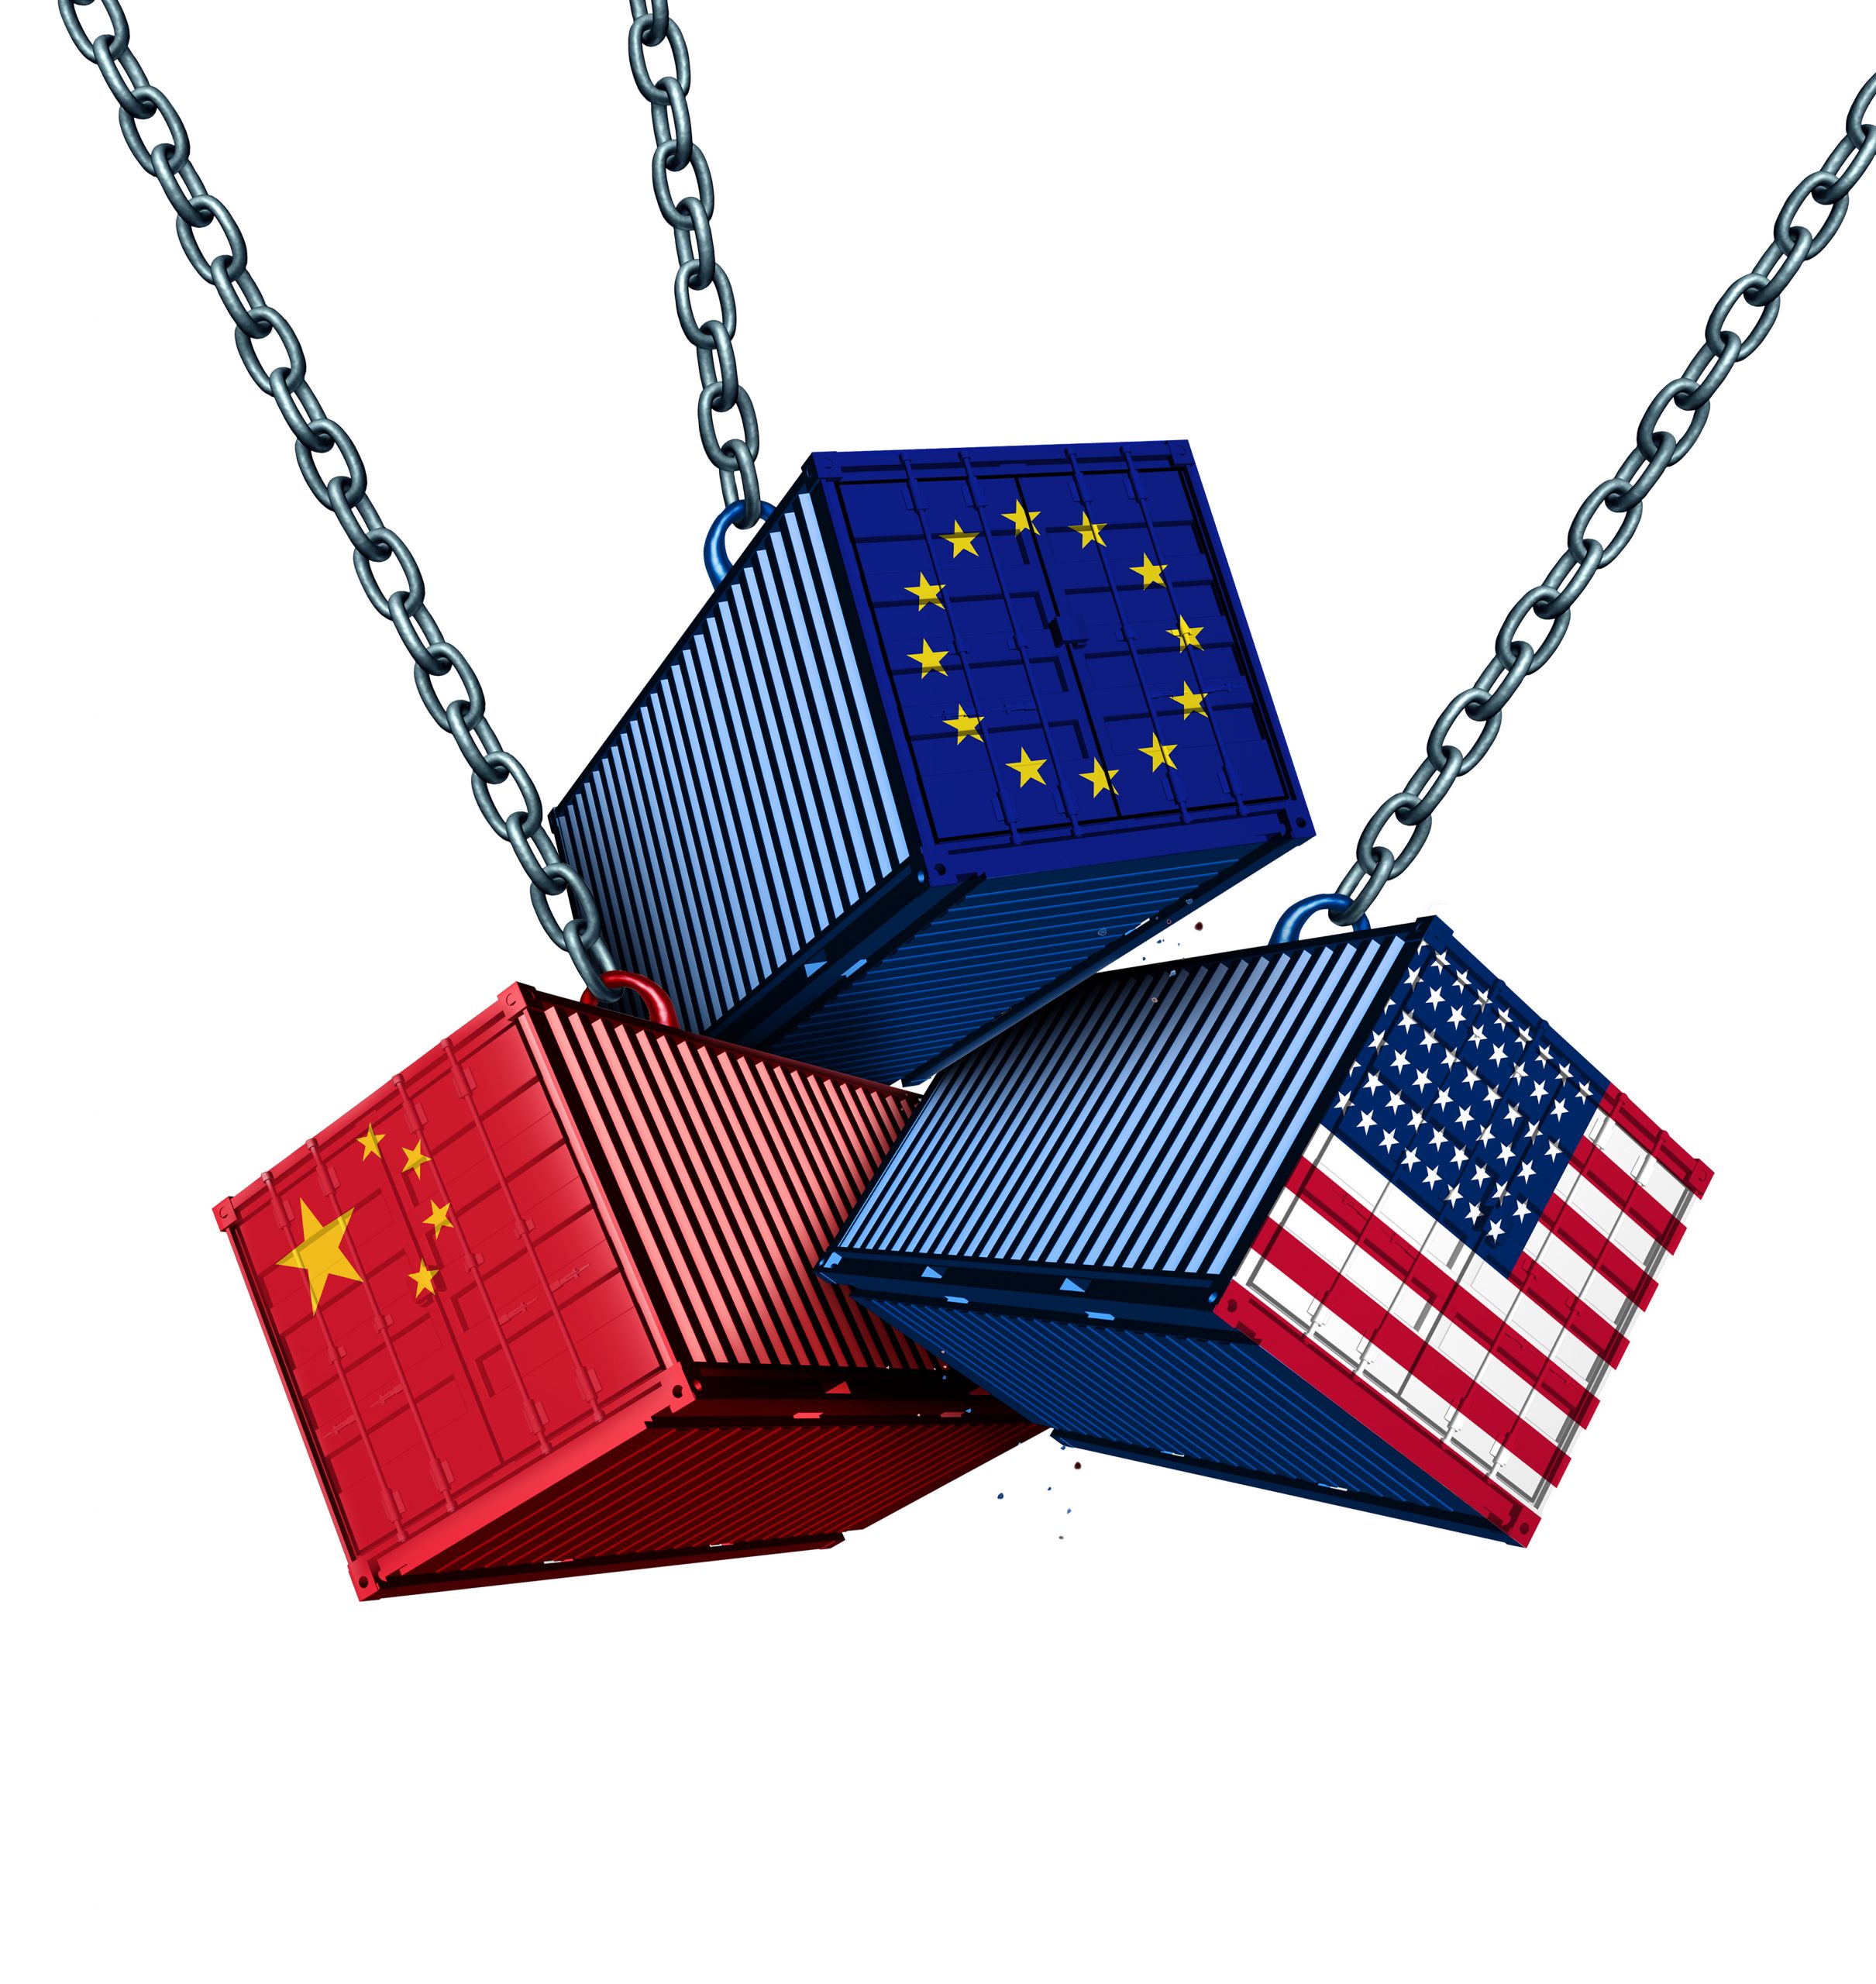 The Chemical Company U.S. China Tariffs Update